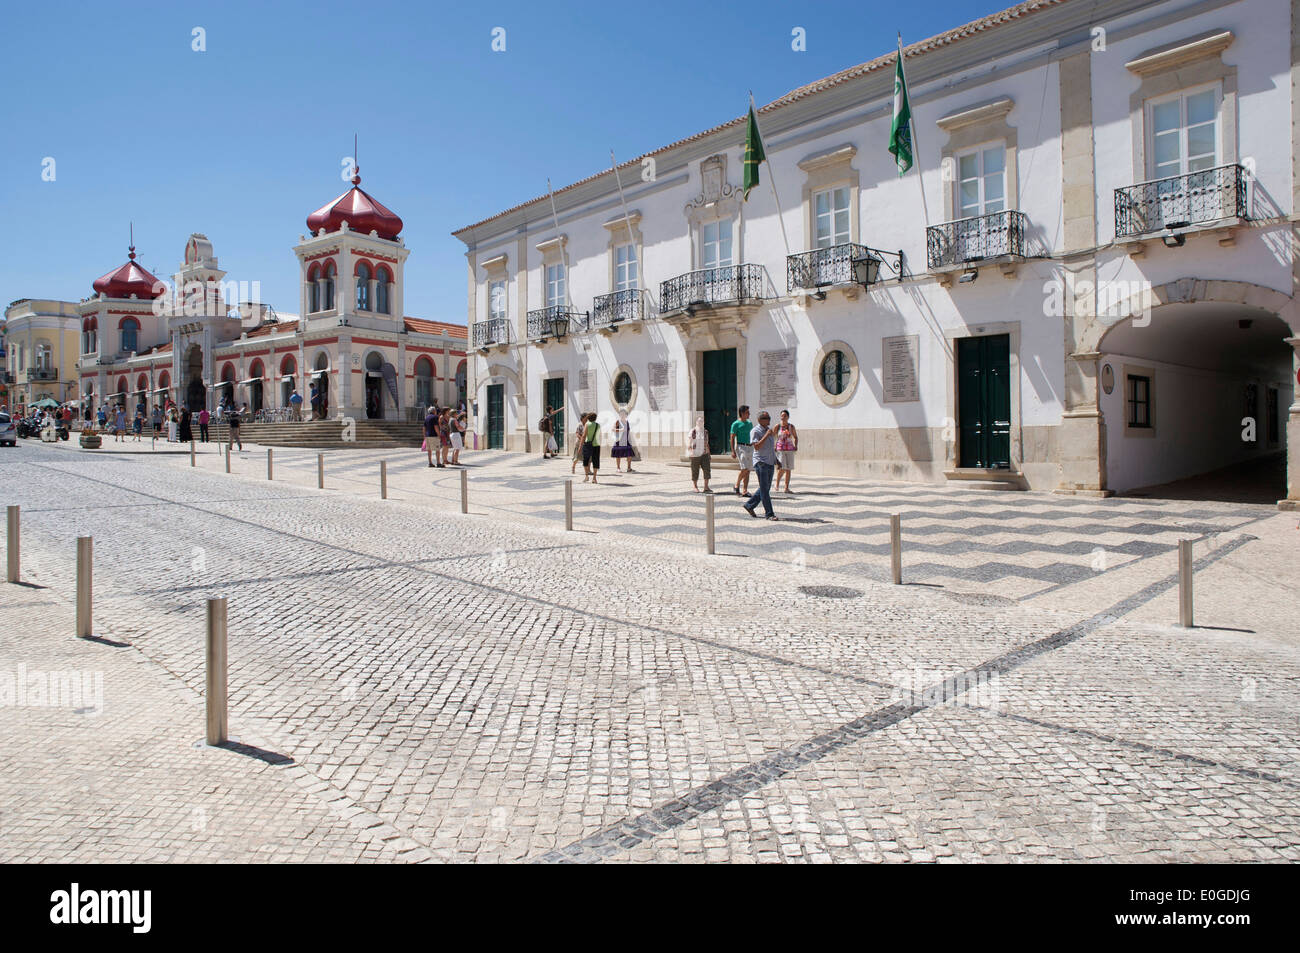 Market and town hall at Loule, Praca da Republica, Algarve, Portugal, Europe Stock Photo